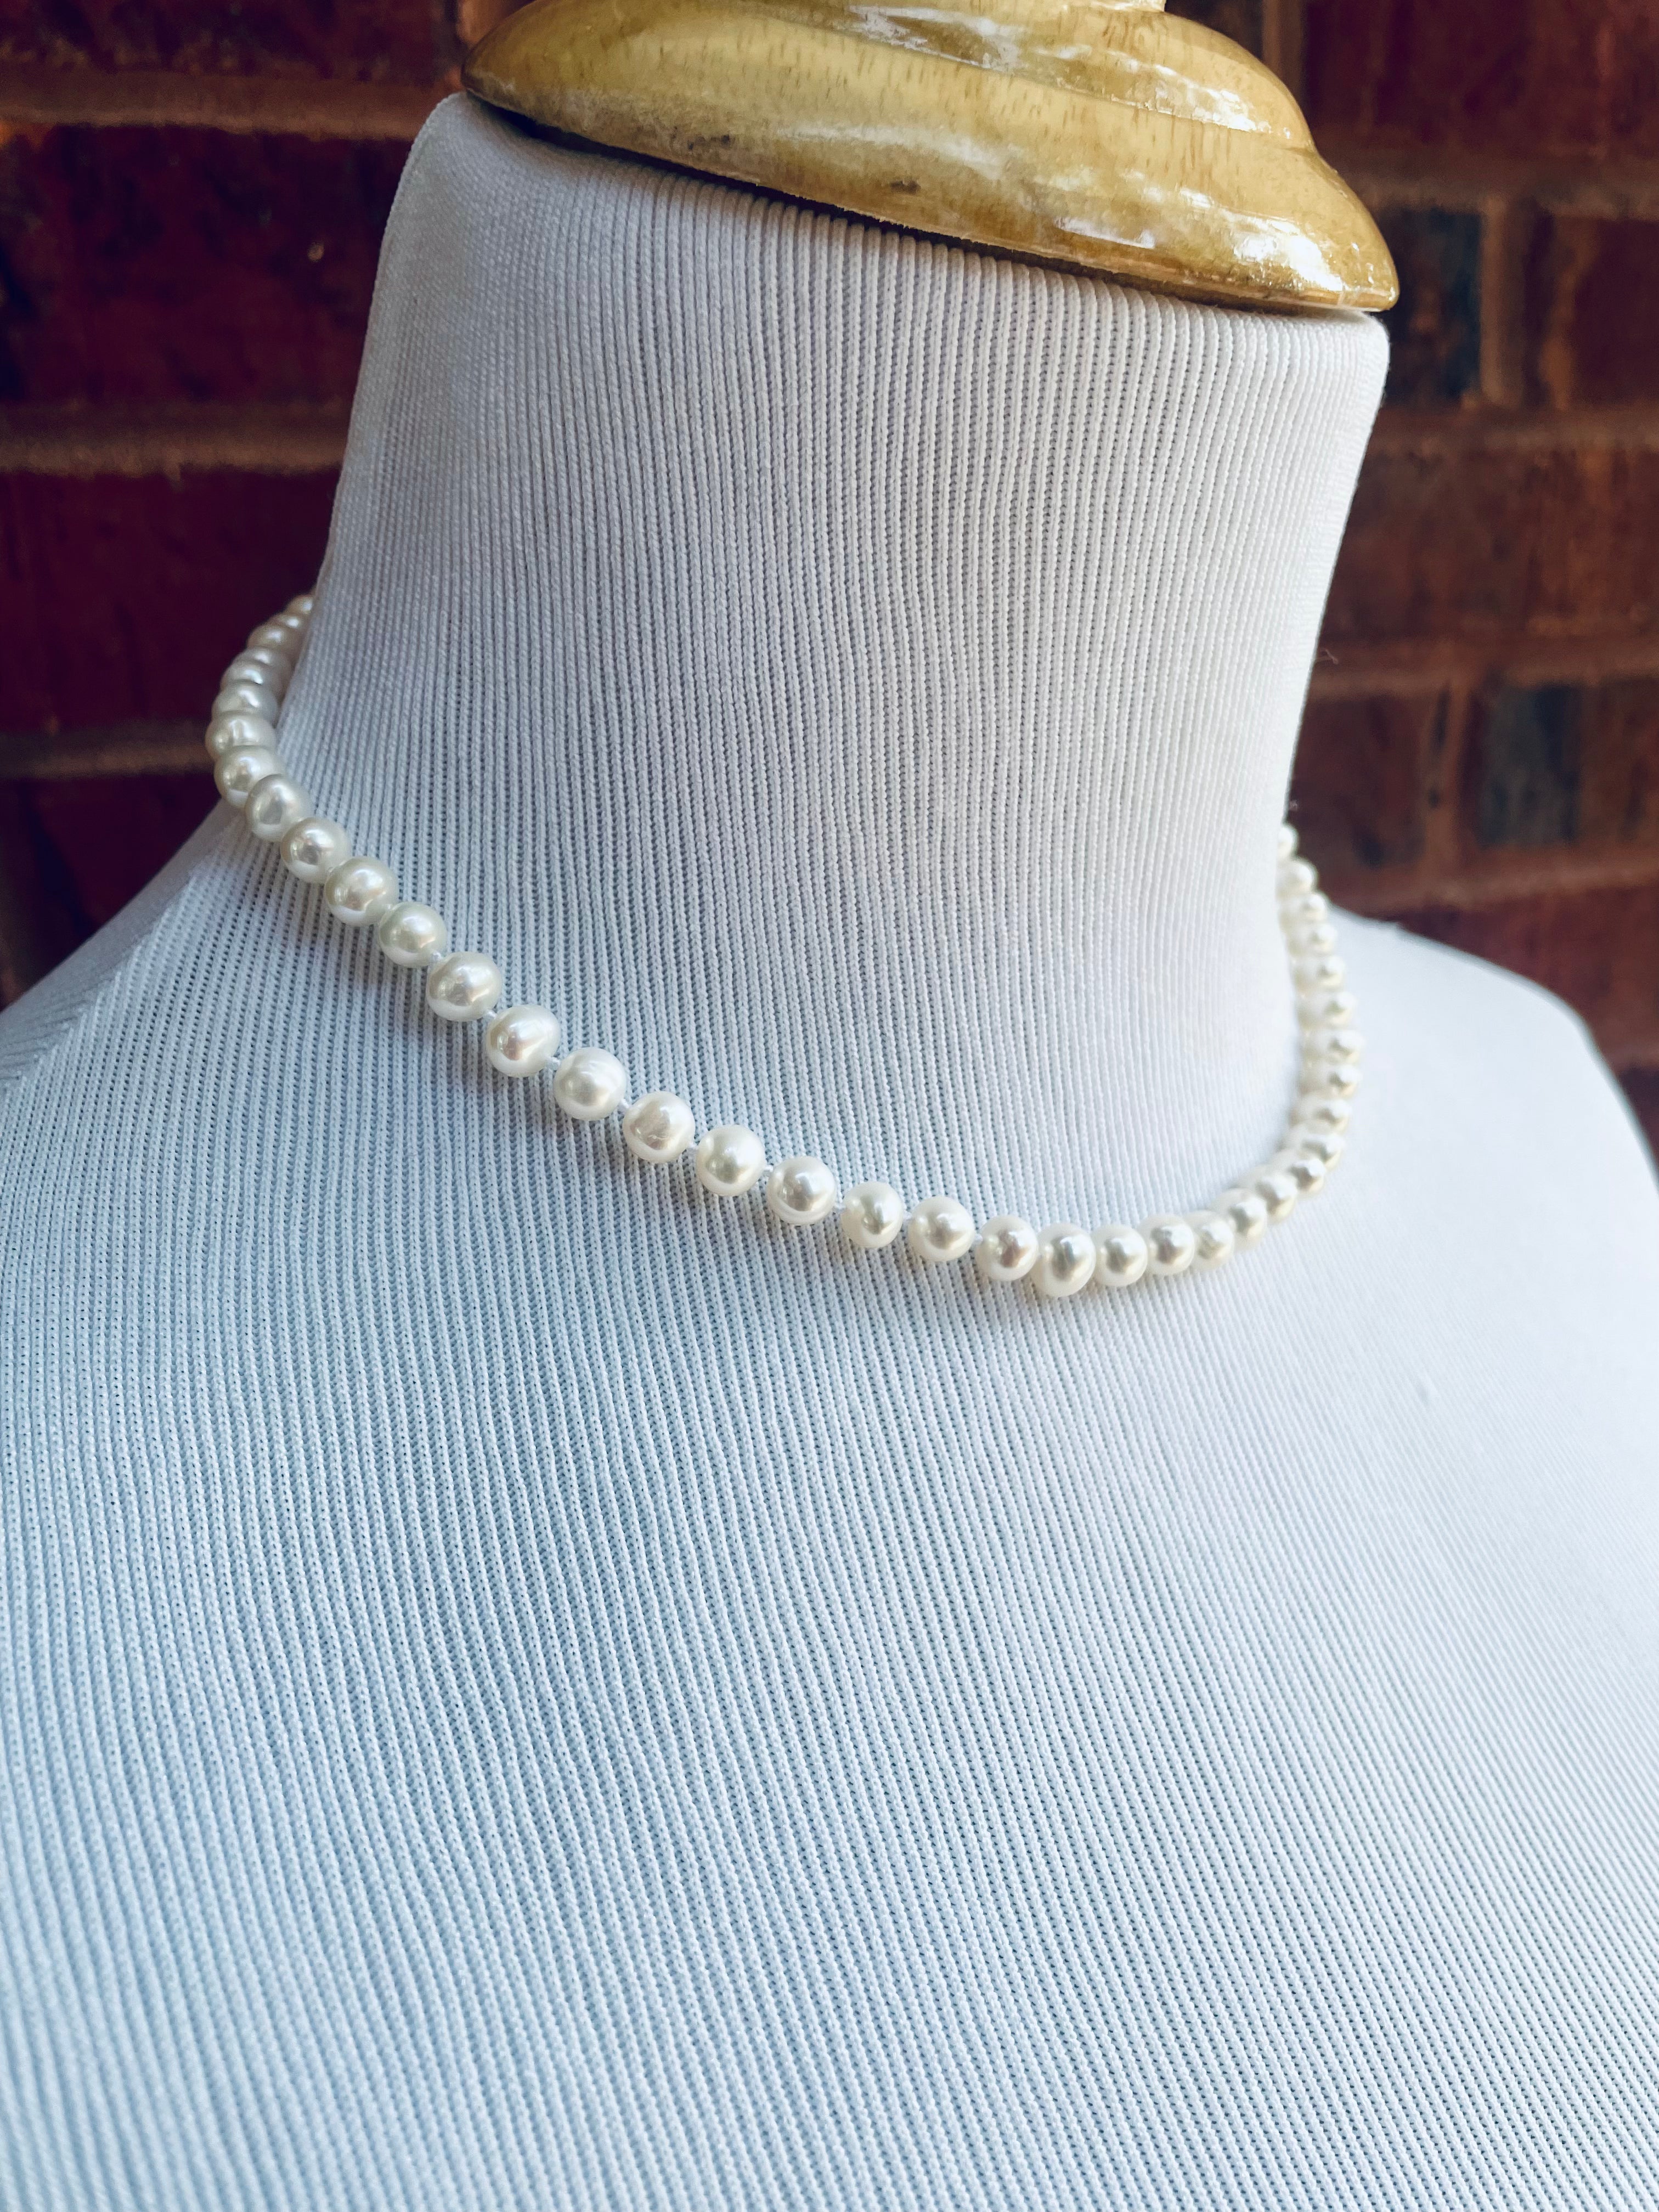 Young ladies simple pearl necklace-16”-18” loop